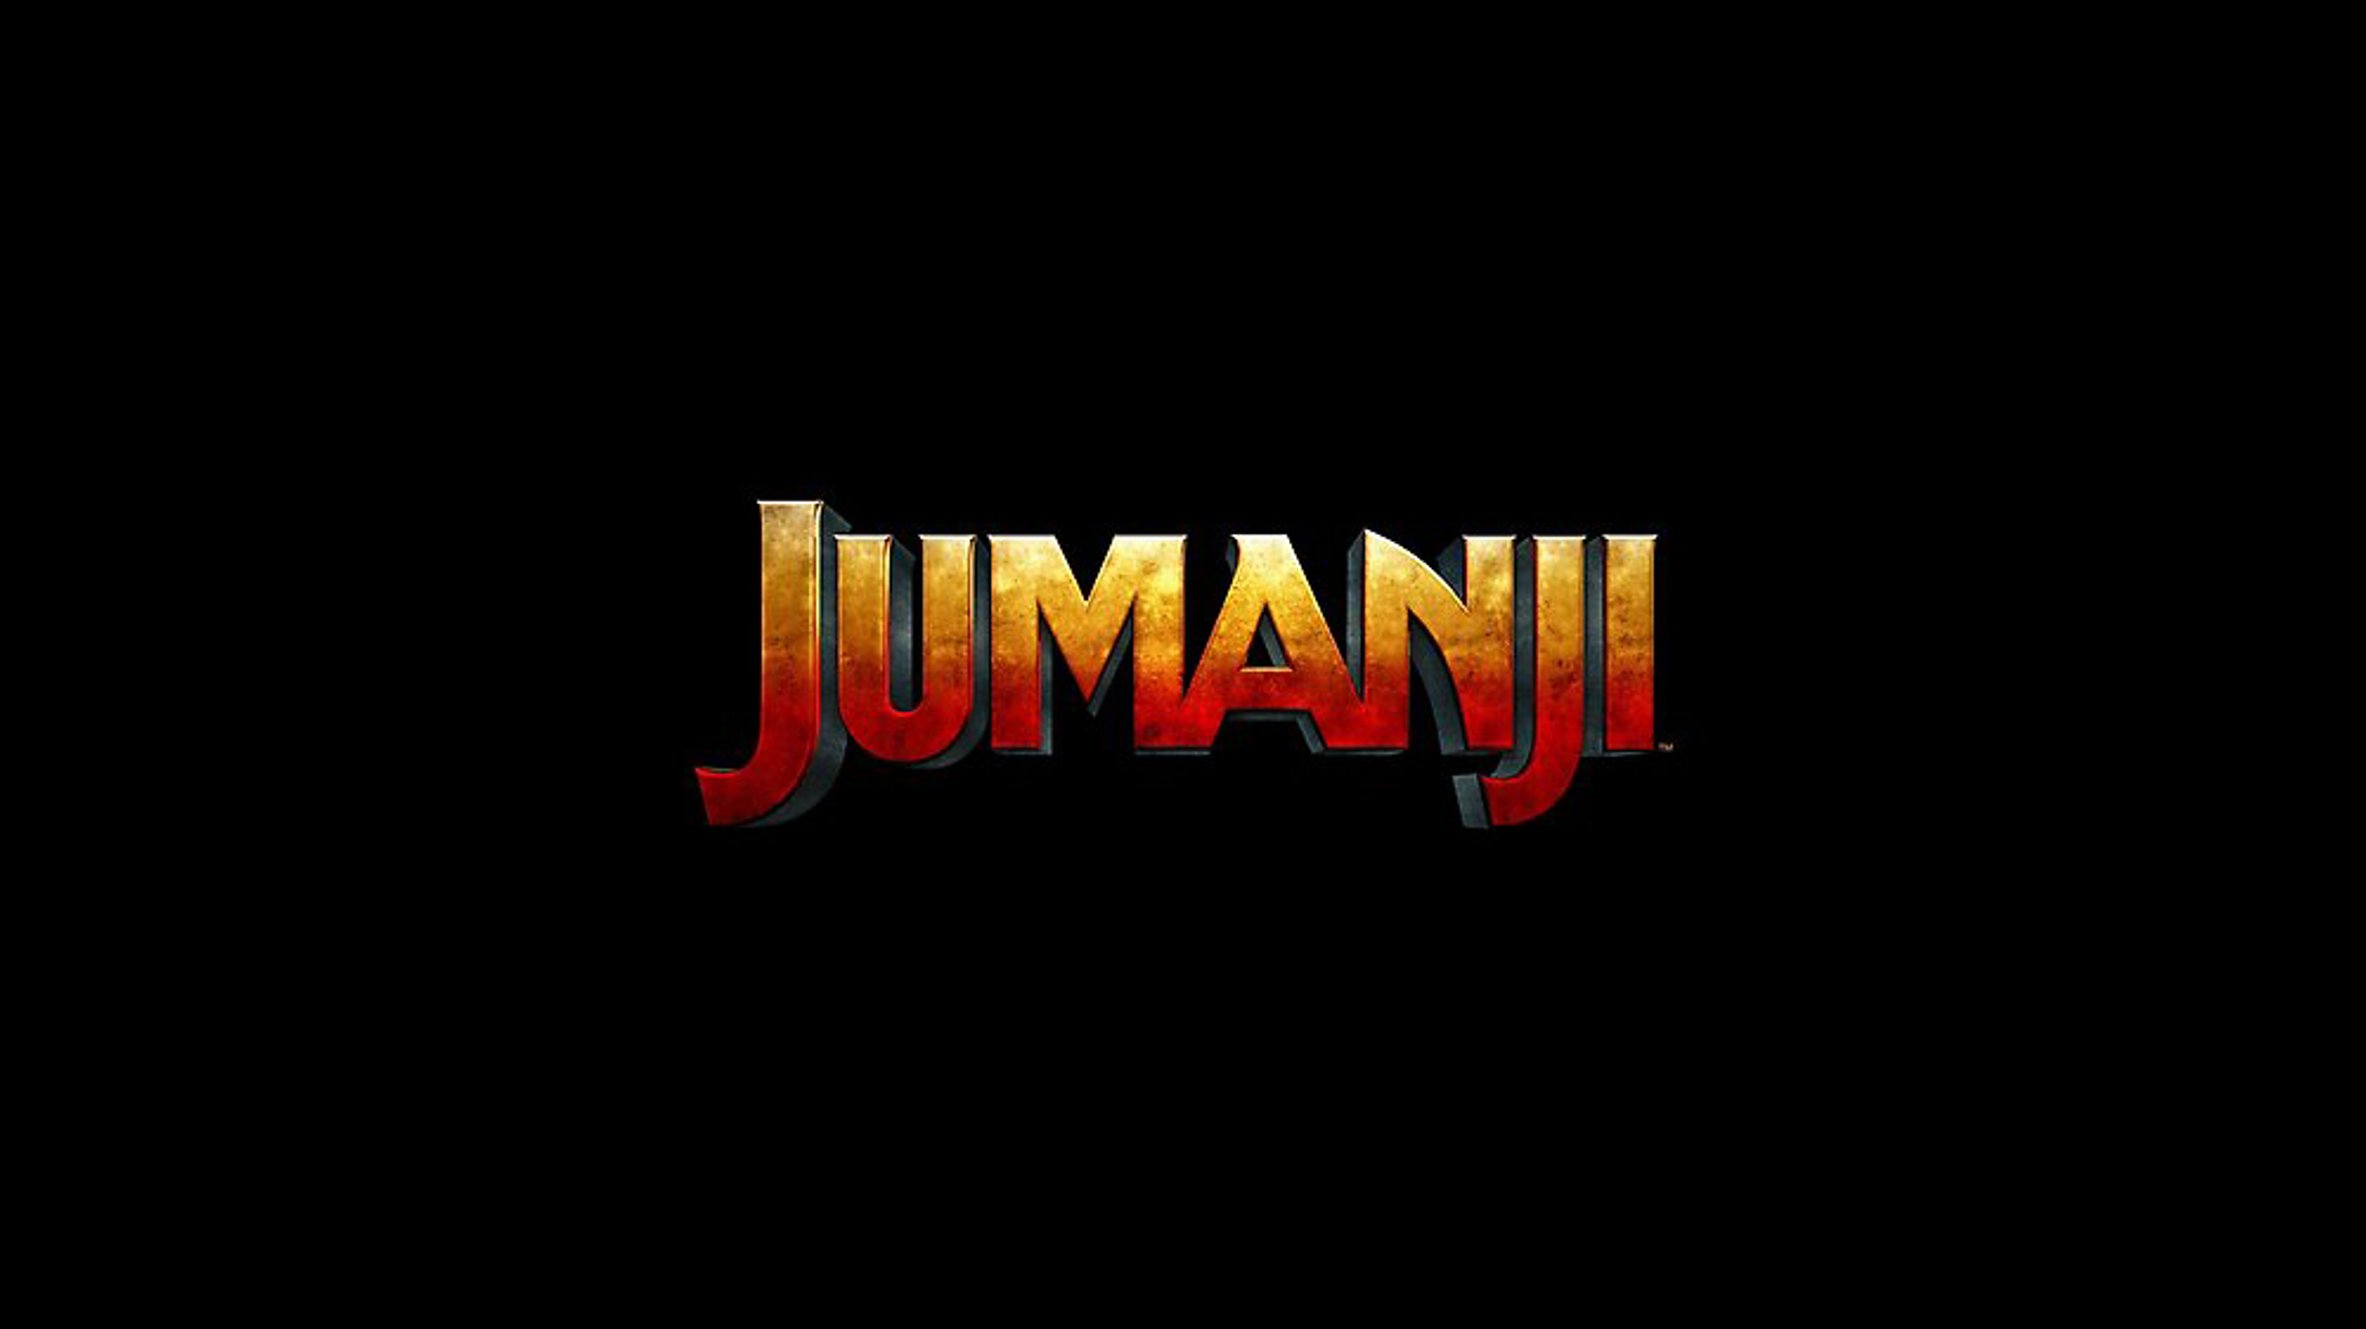 Jumanji 3 Hiring For Featured Roles